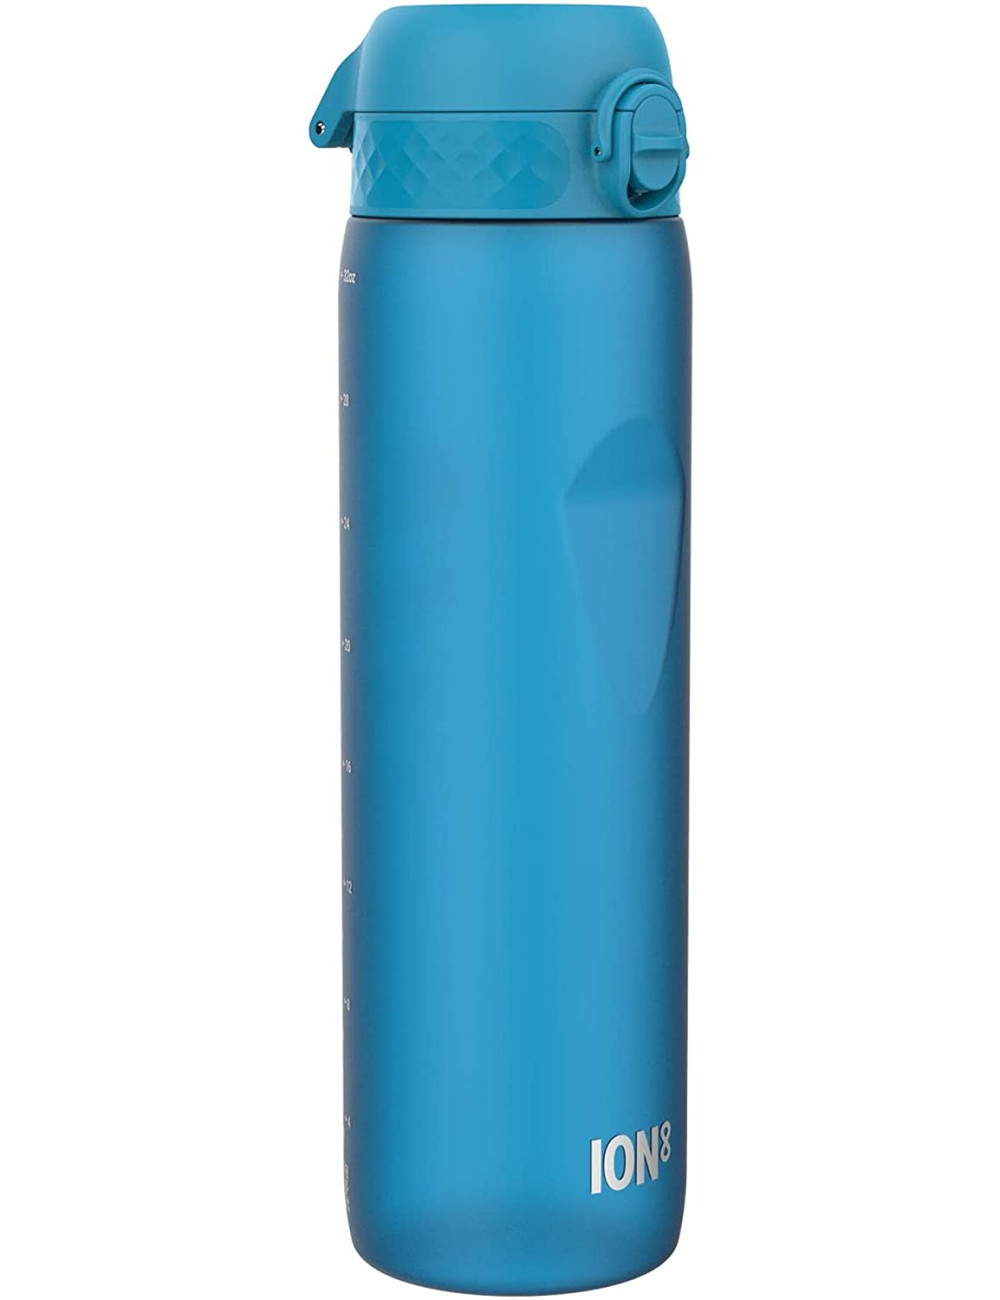 Butelka ION8 BPA free Blue 1000 ml